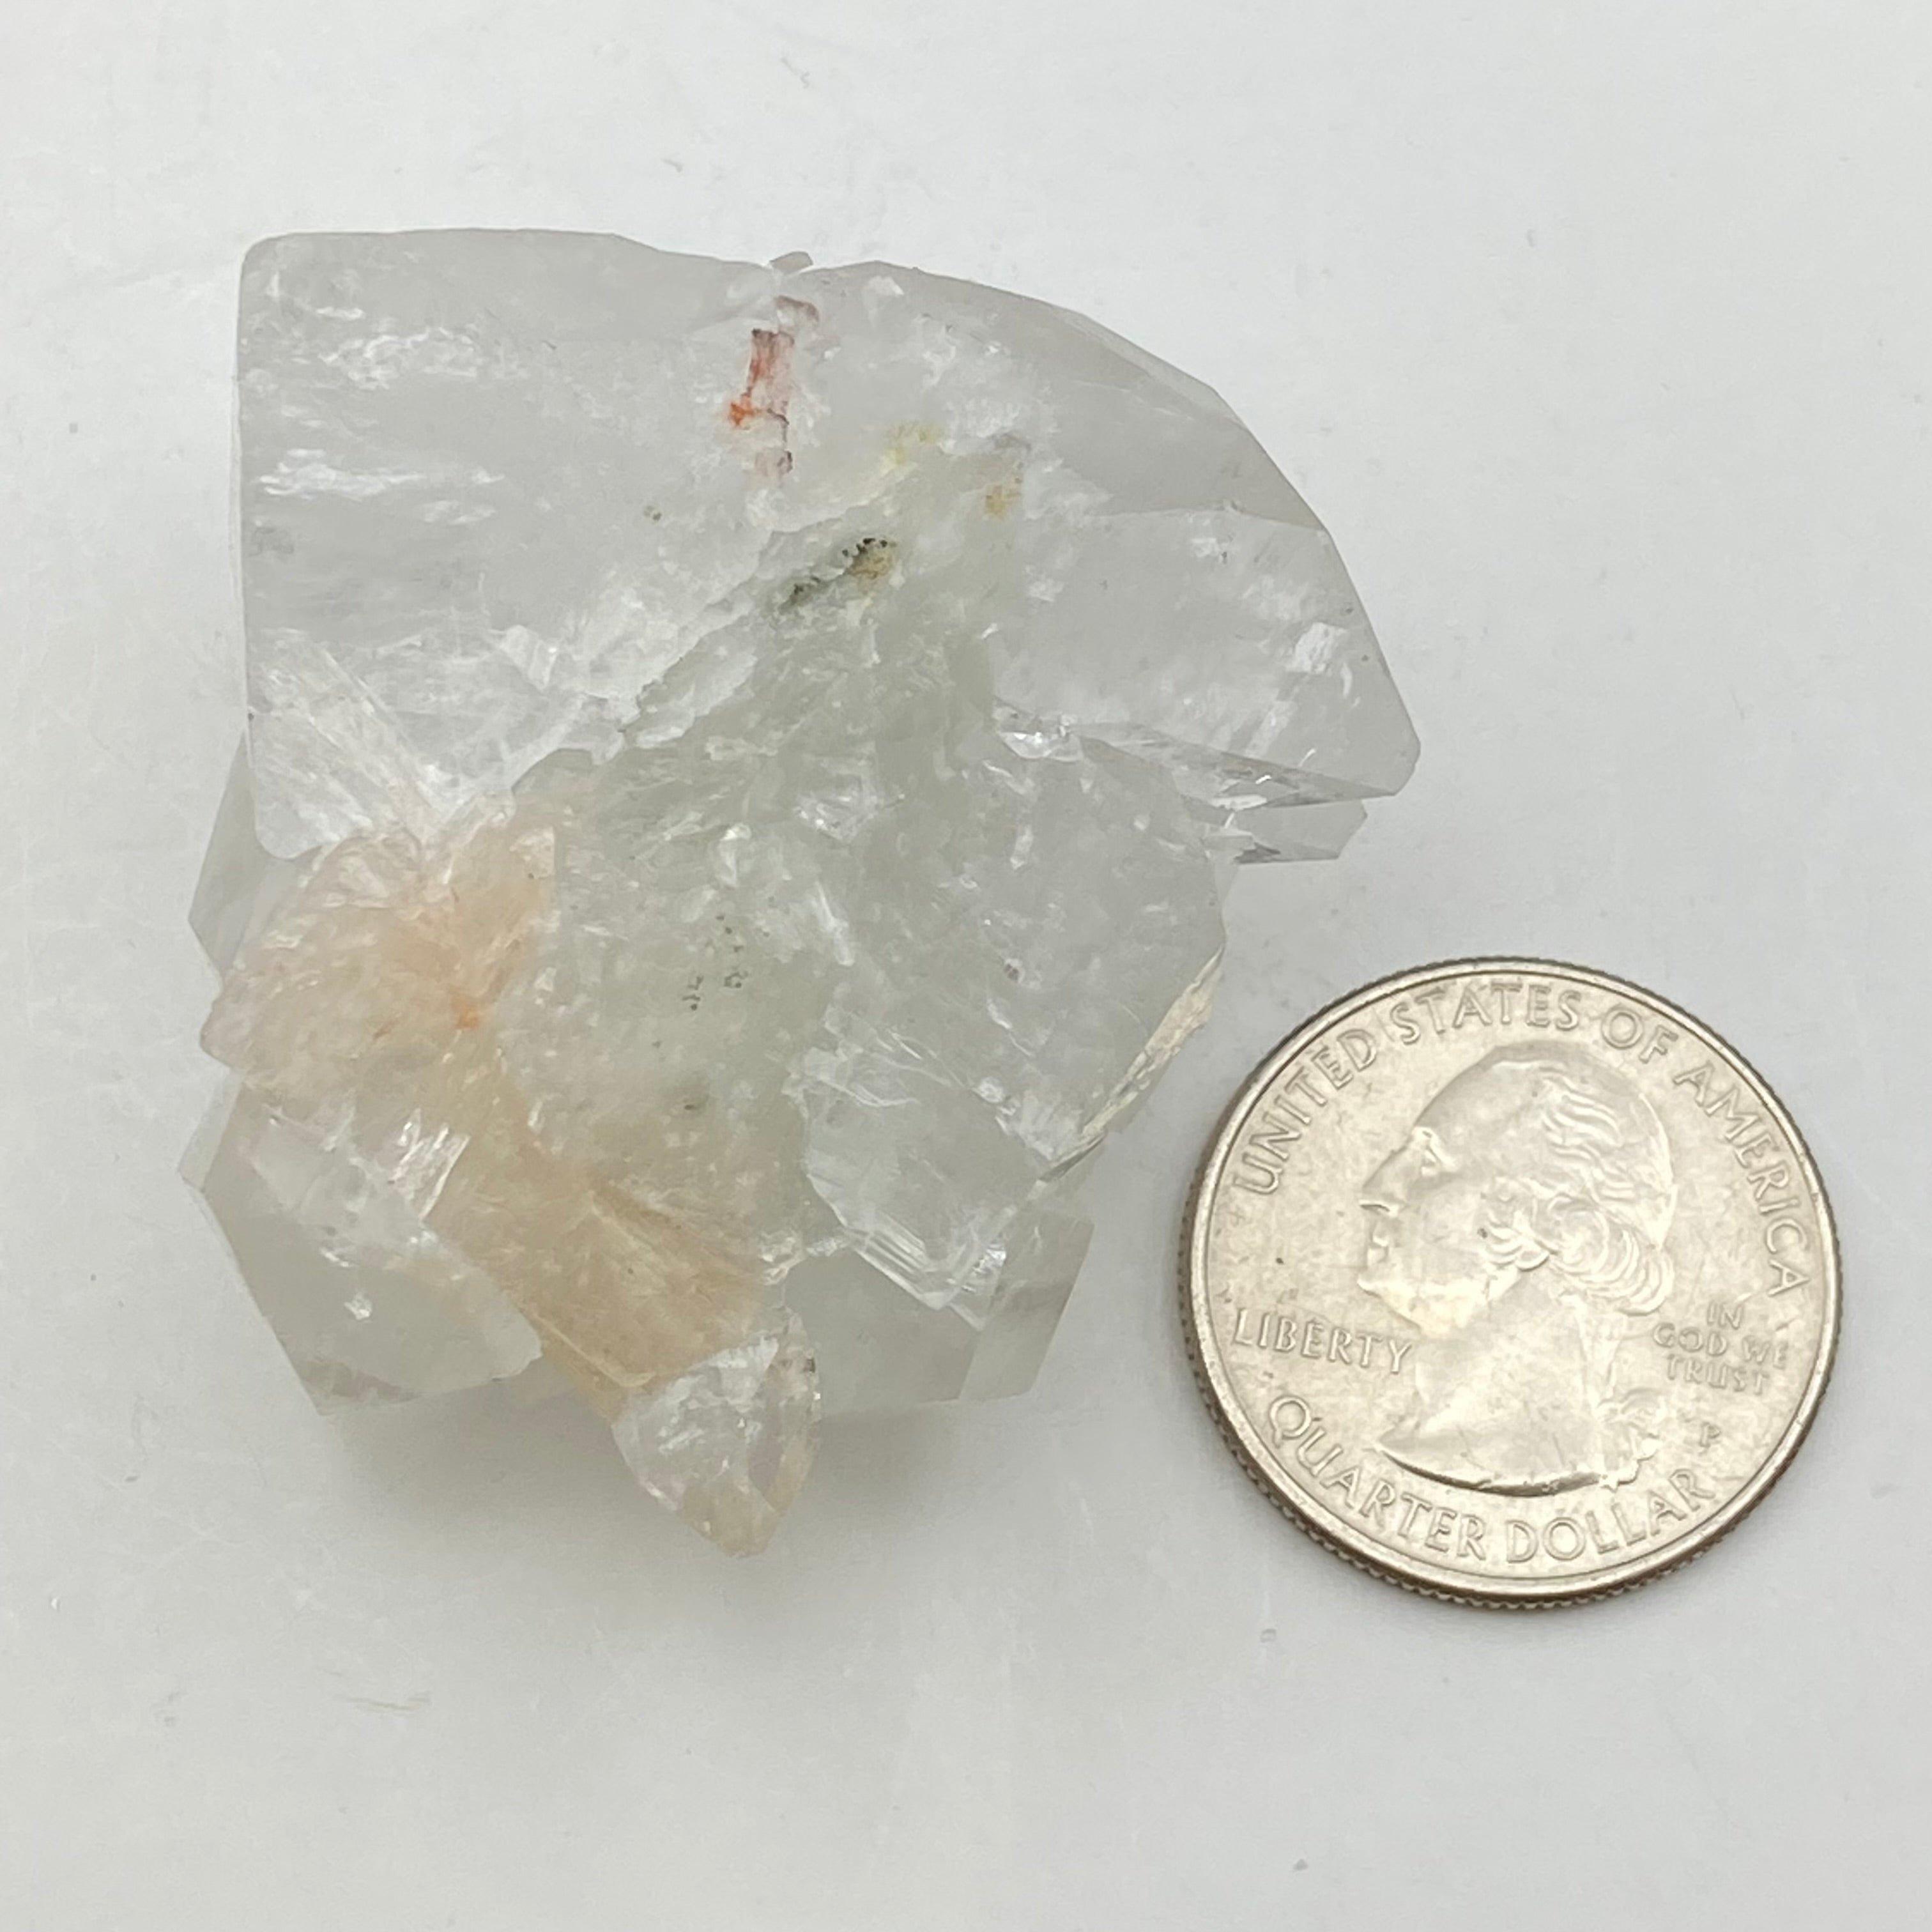 Apophyllite Crystal - 288